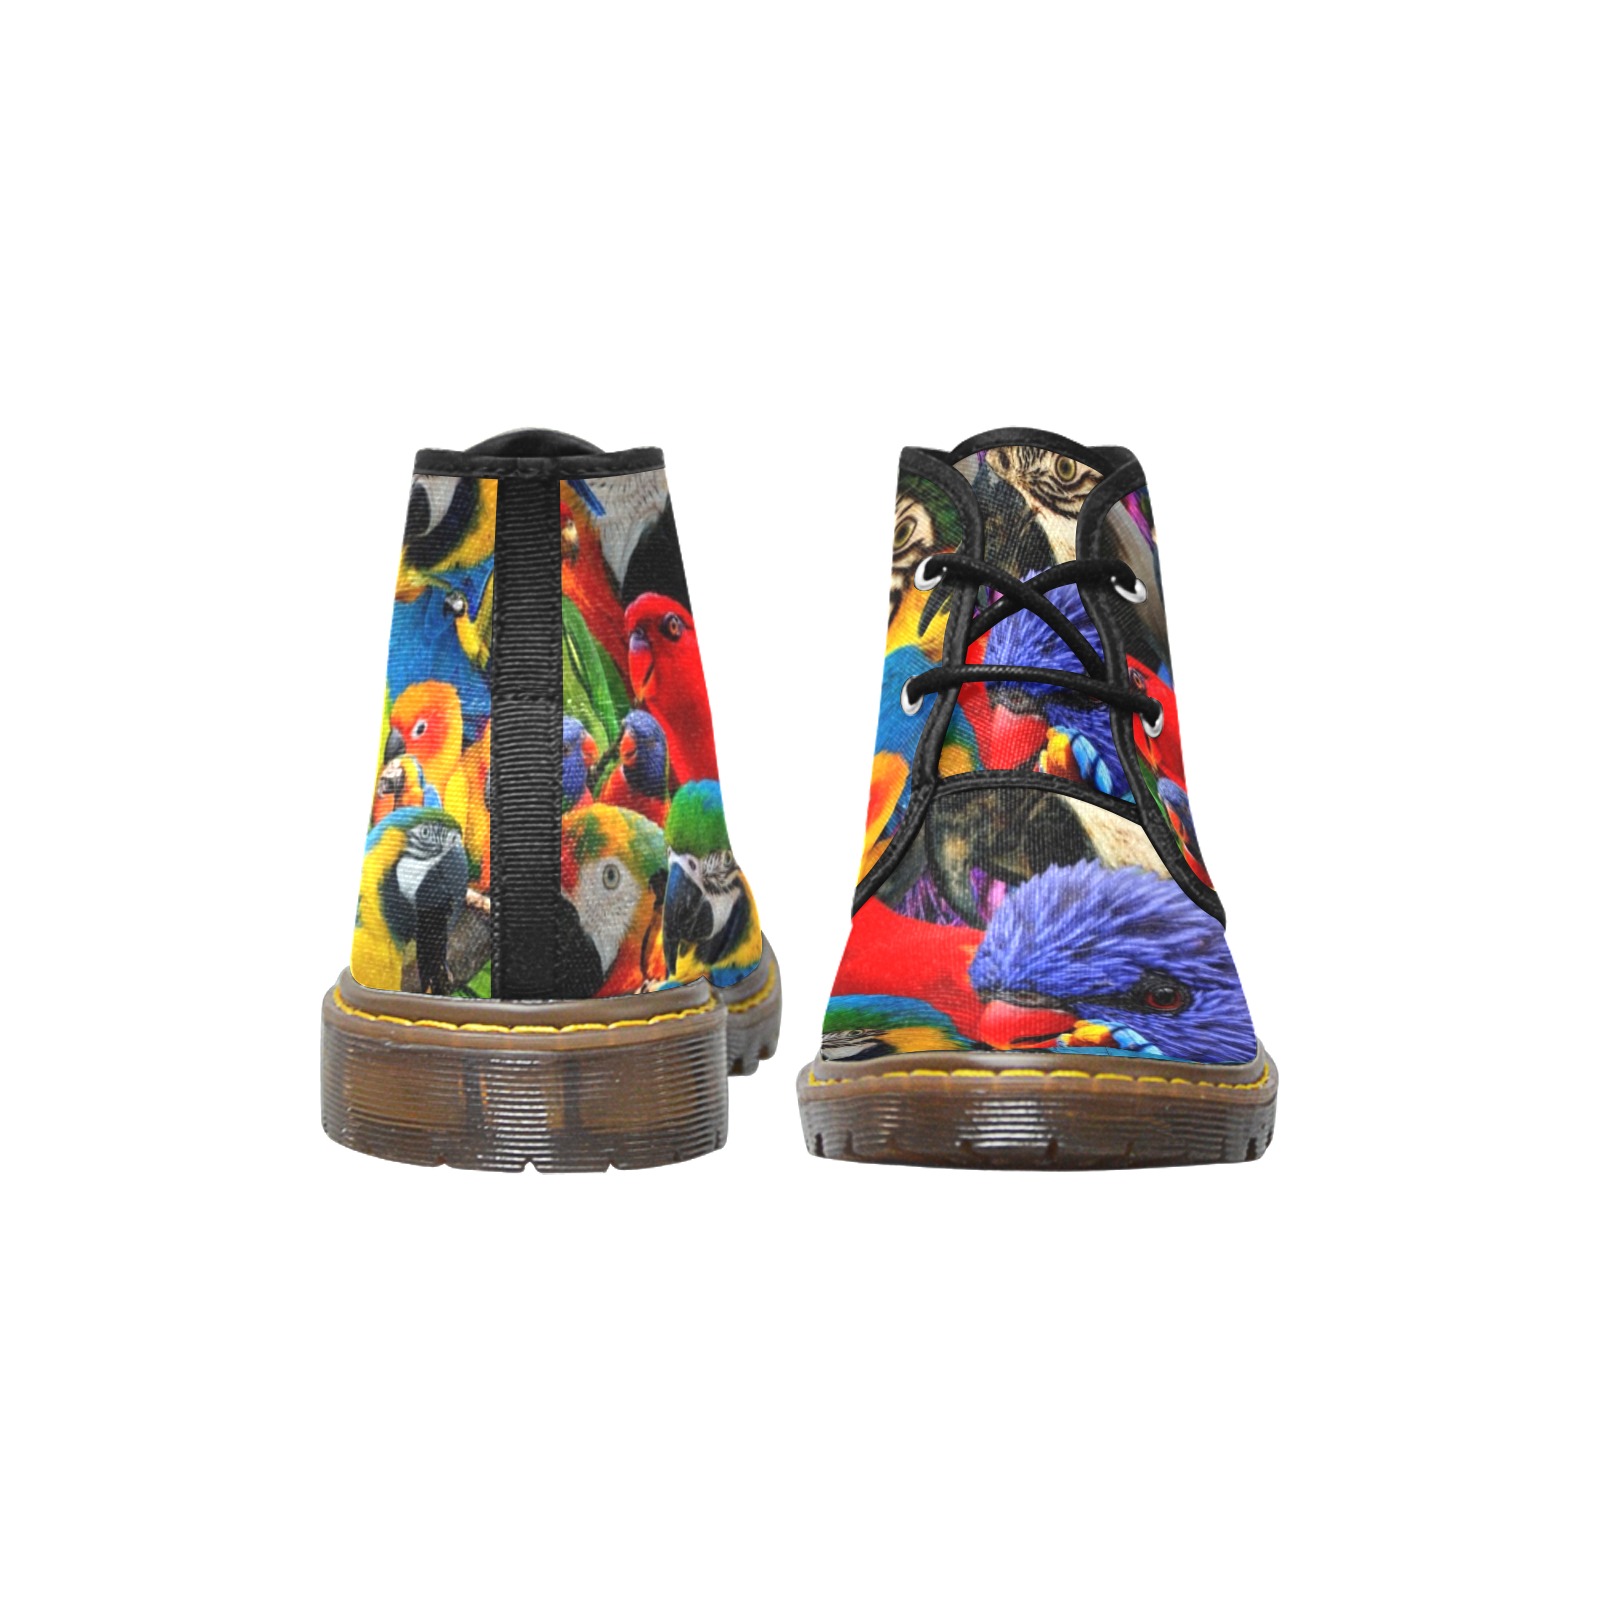 PARROTS Women's Canvas Chukka Boots (Model 2402-1)